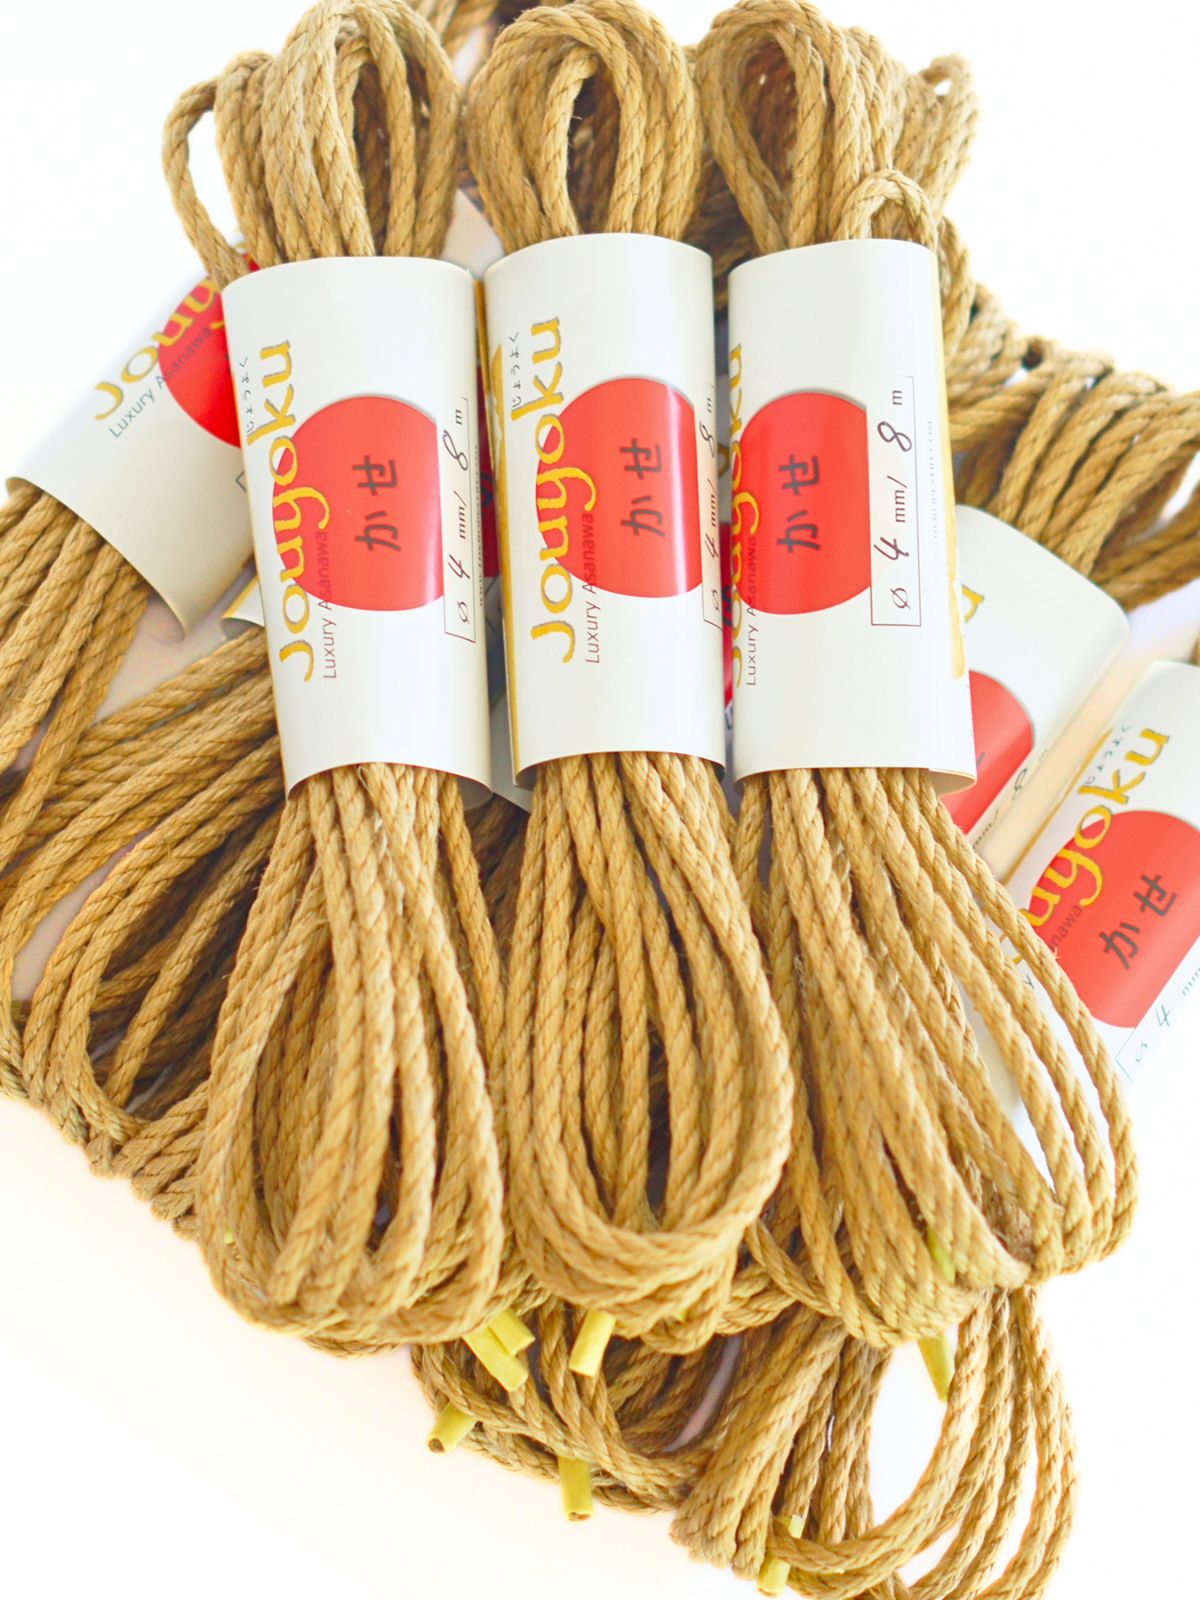 ø 4mm JOUYOKU ready-to-use jute rope for Shibari, Kinbaku bondage, various lengths and sets